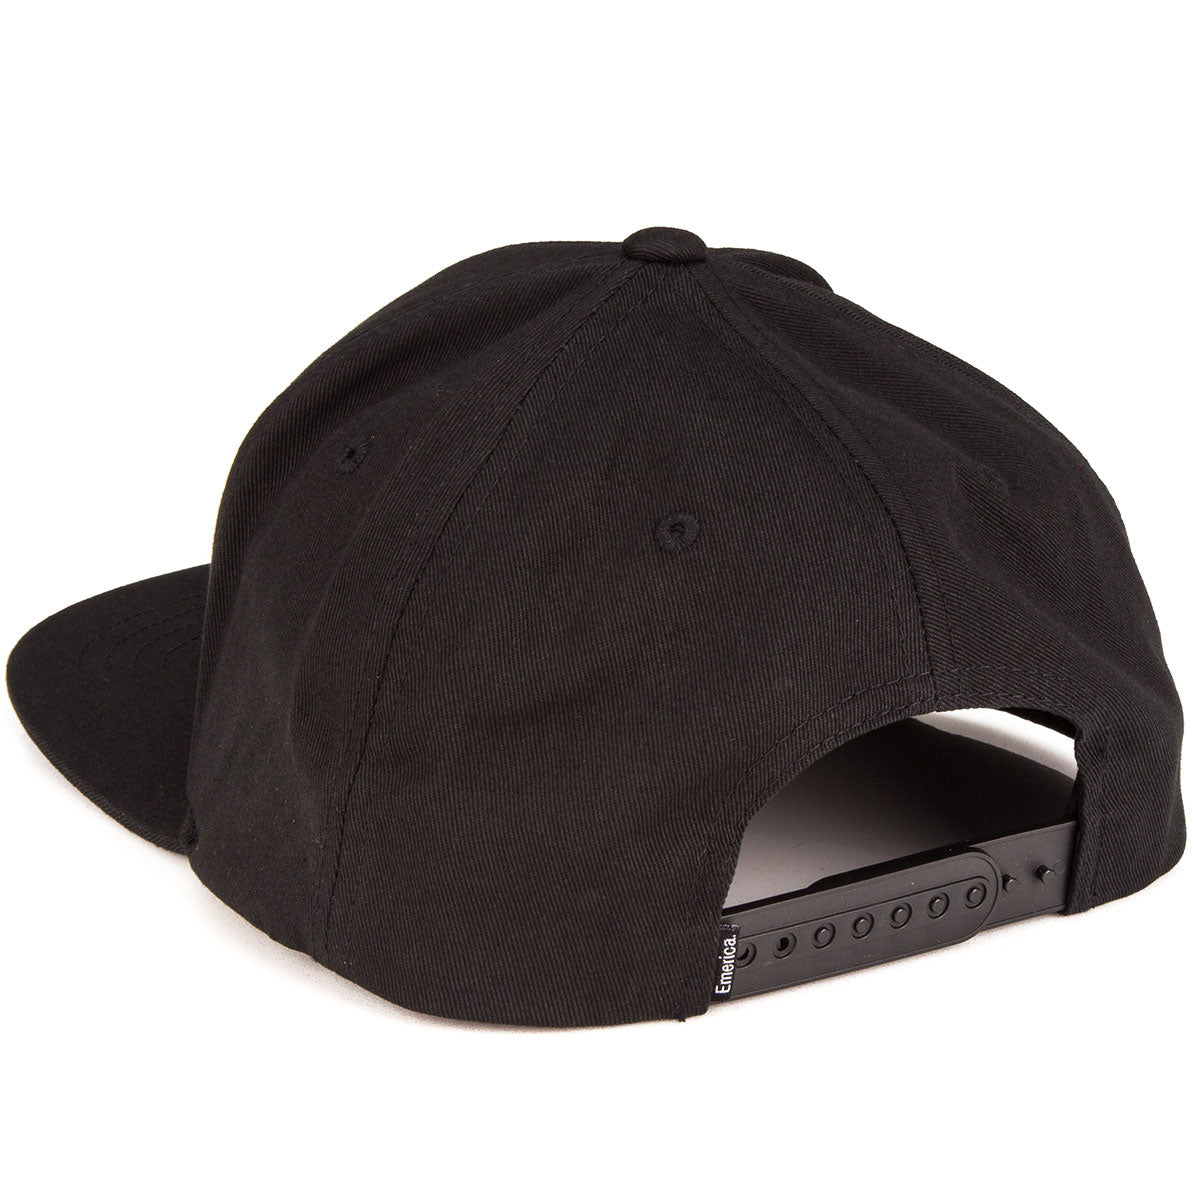 Emerica Triangle Snapback Hat - Black image 2